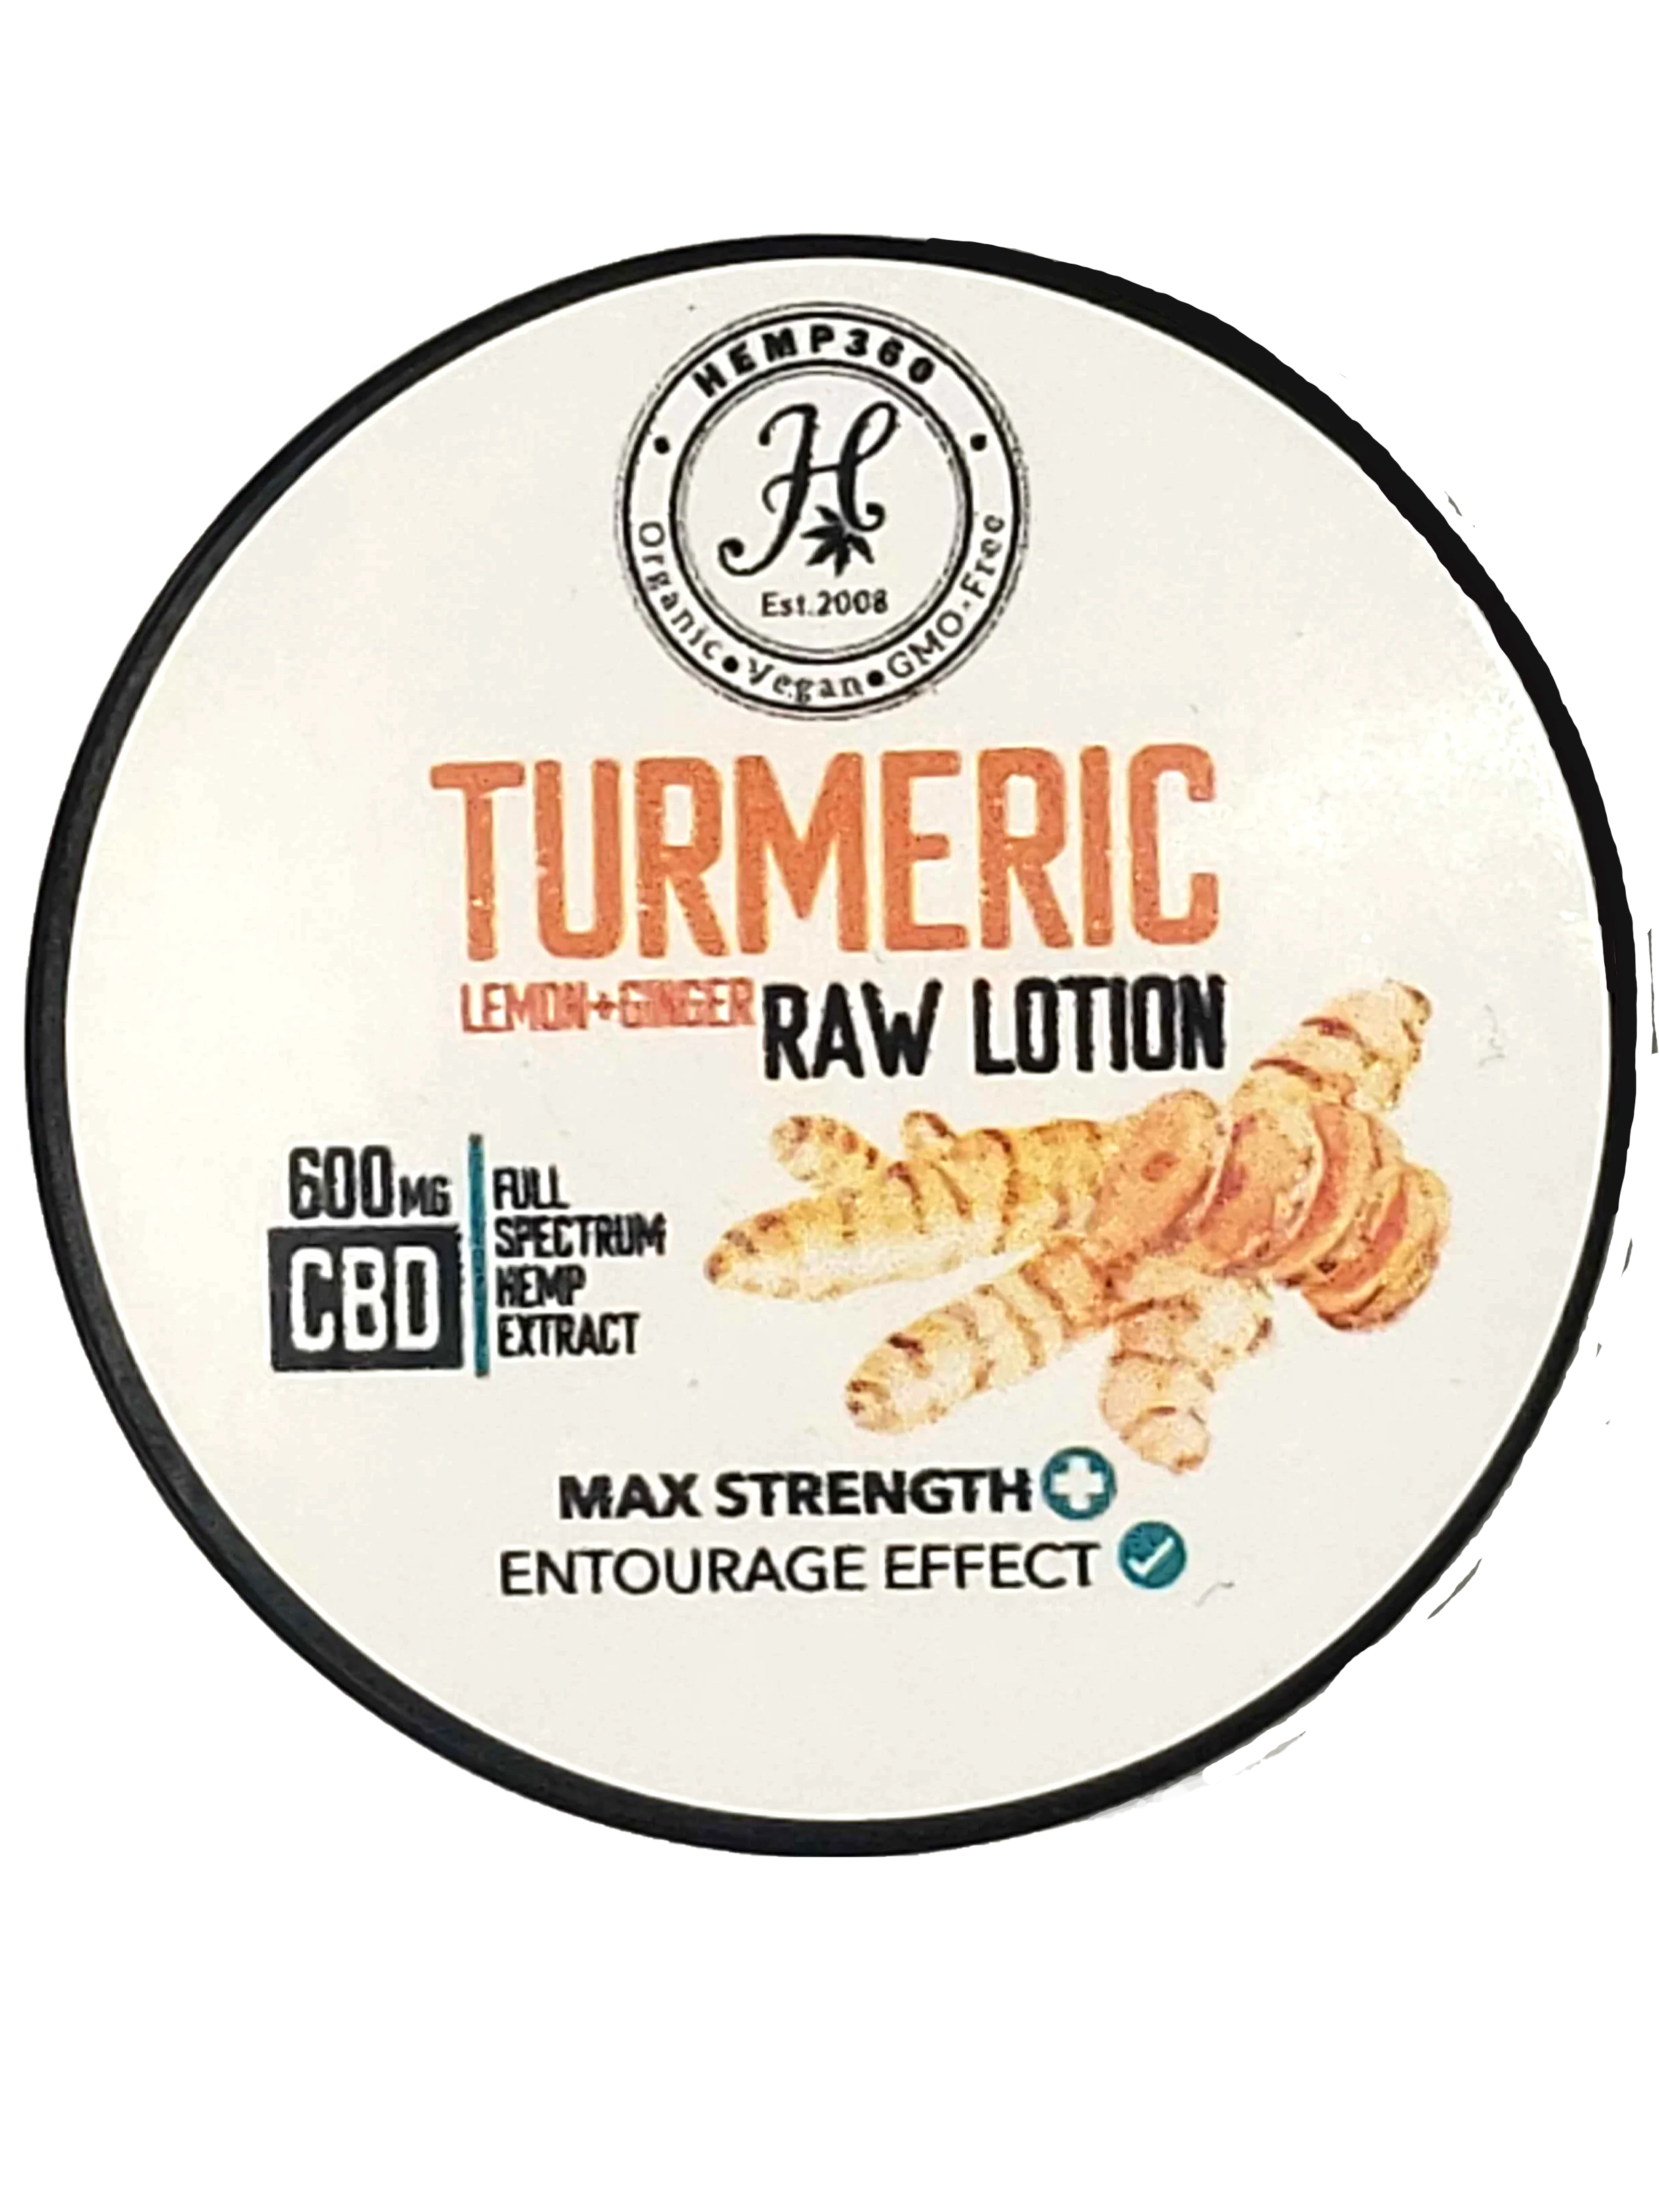 Turmeric Raw Lotion 600mg Full Spectrum CBD .5oz